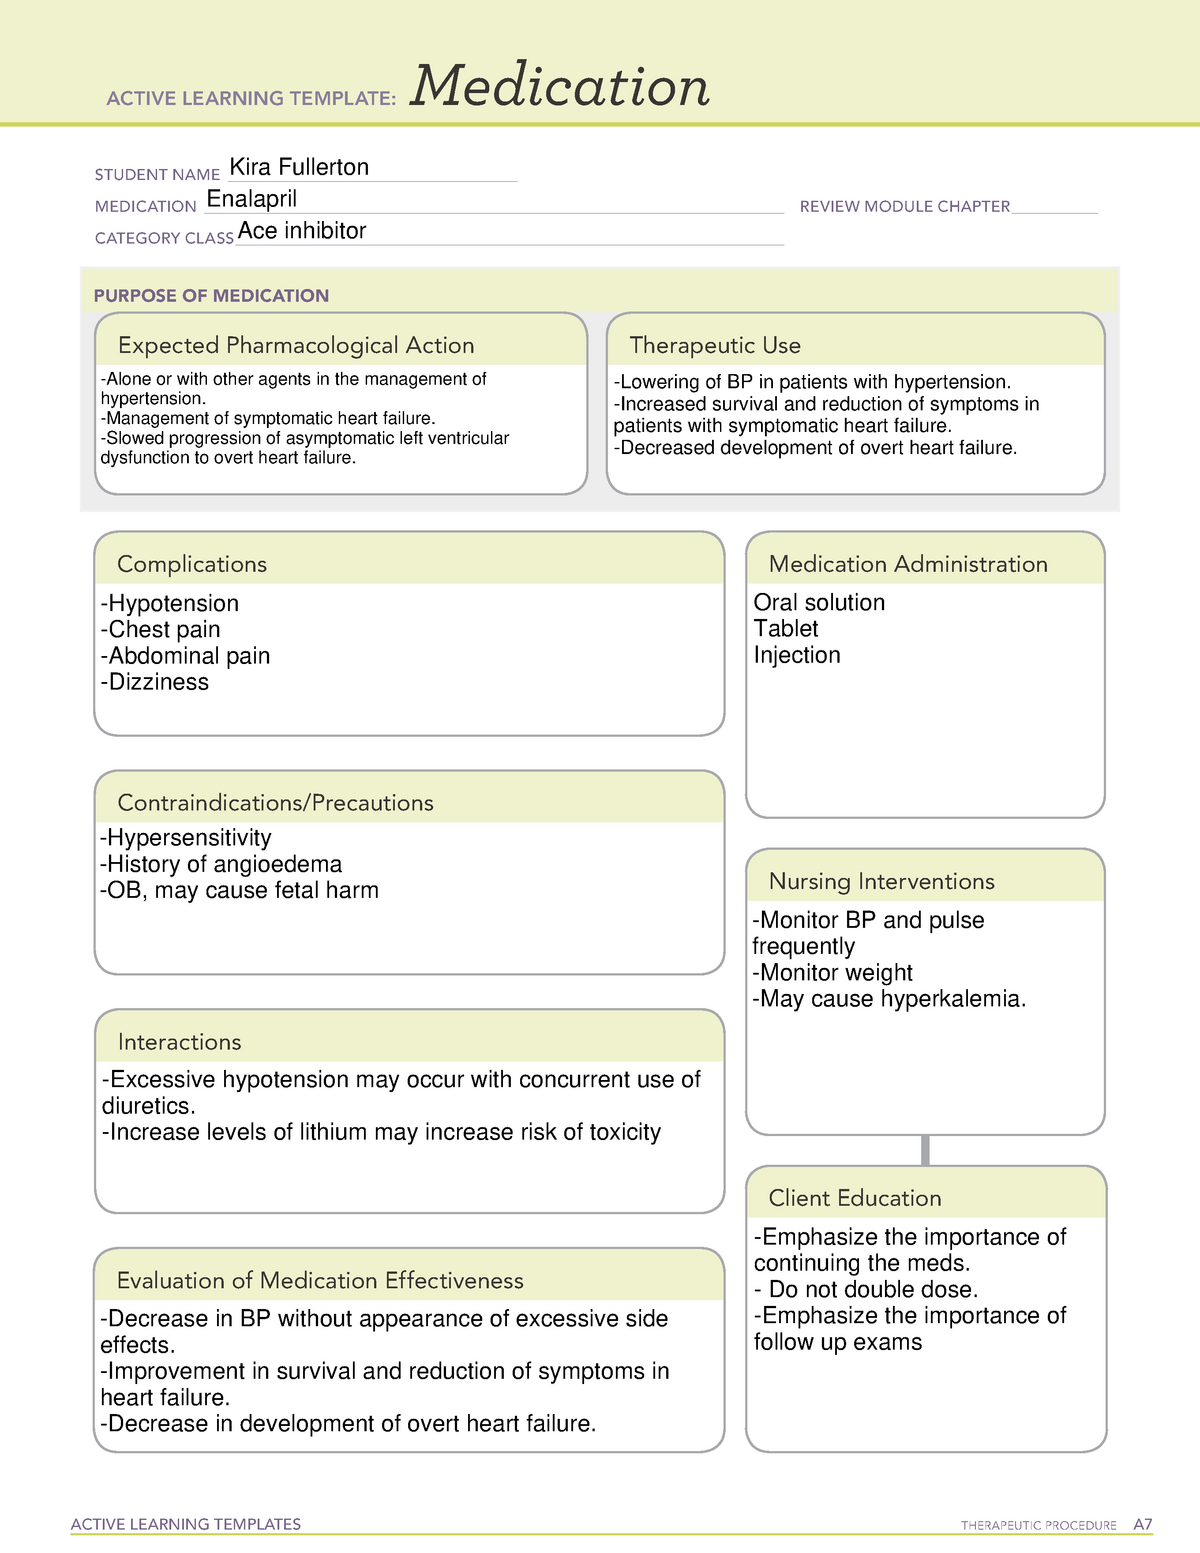 MED Enalapril ATI medications sheet ACTIVE LEARNING TEMPLATES